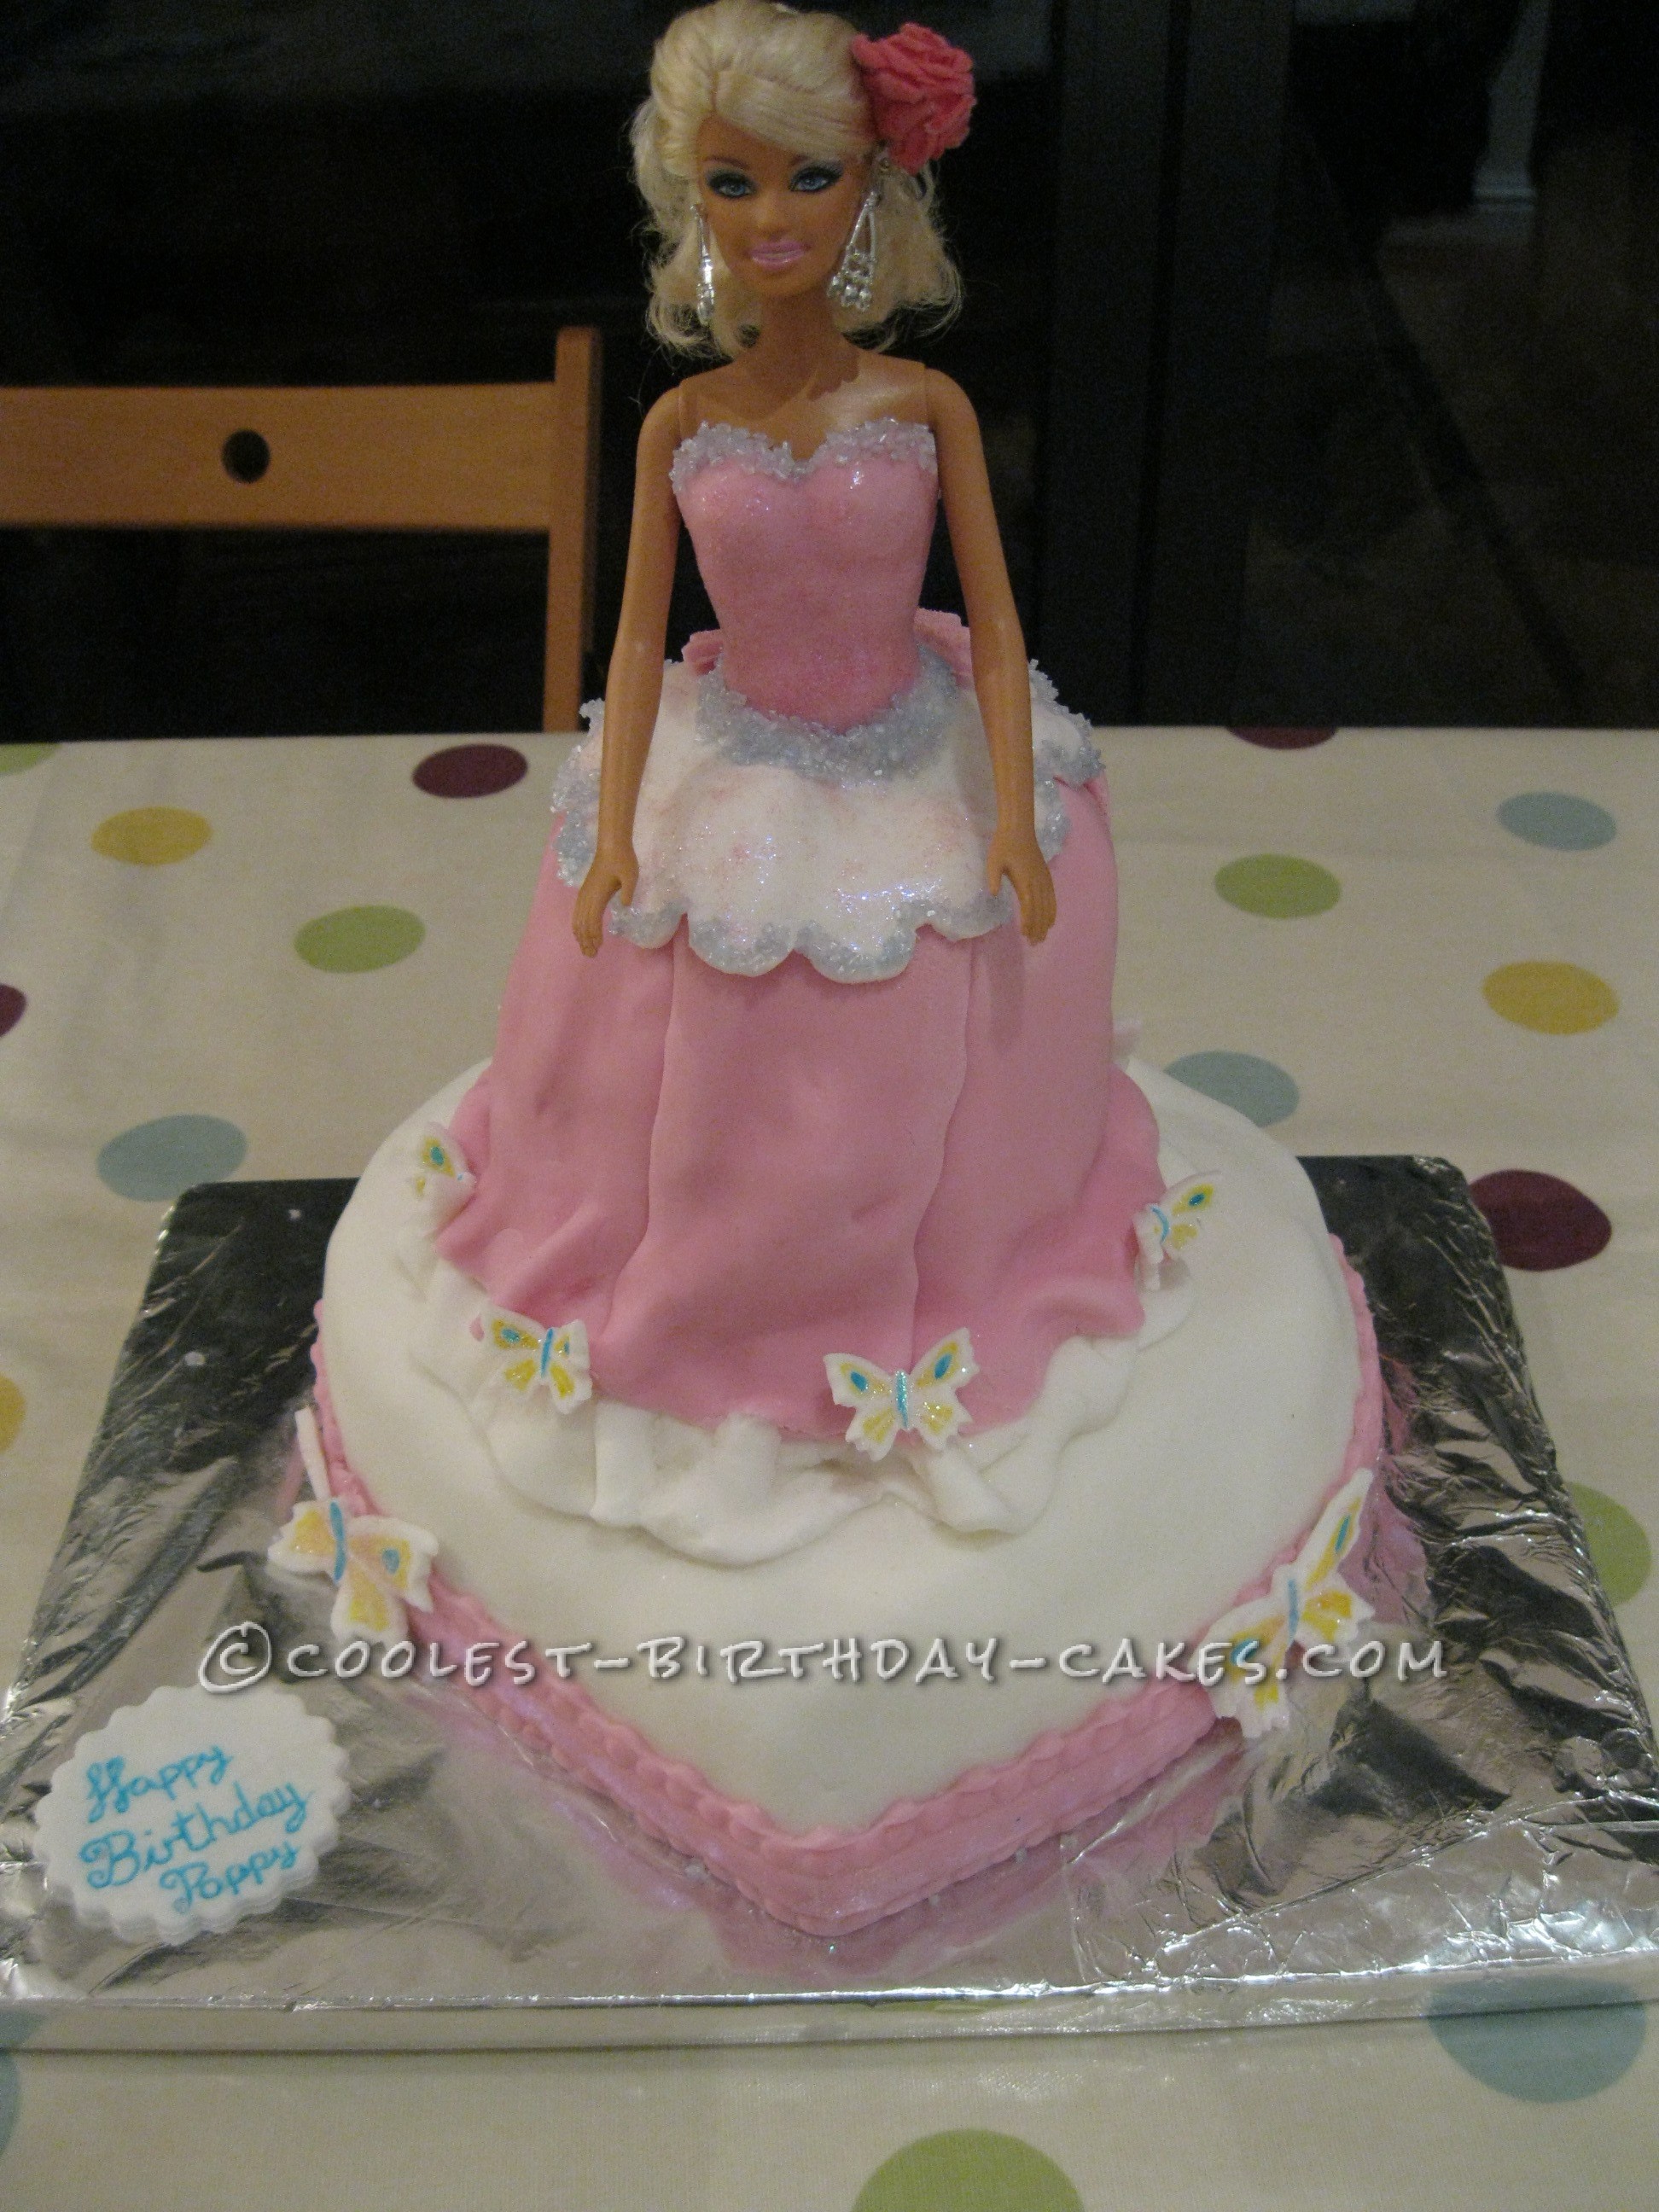 Dazzling Princess Cake Fit for a Princess